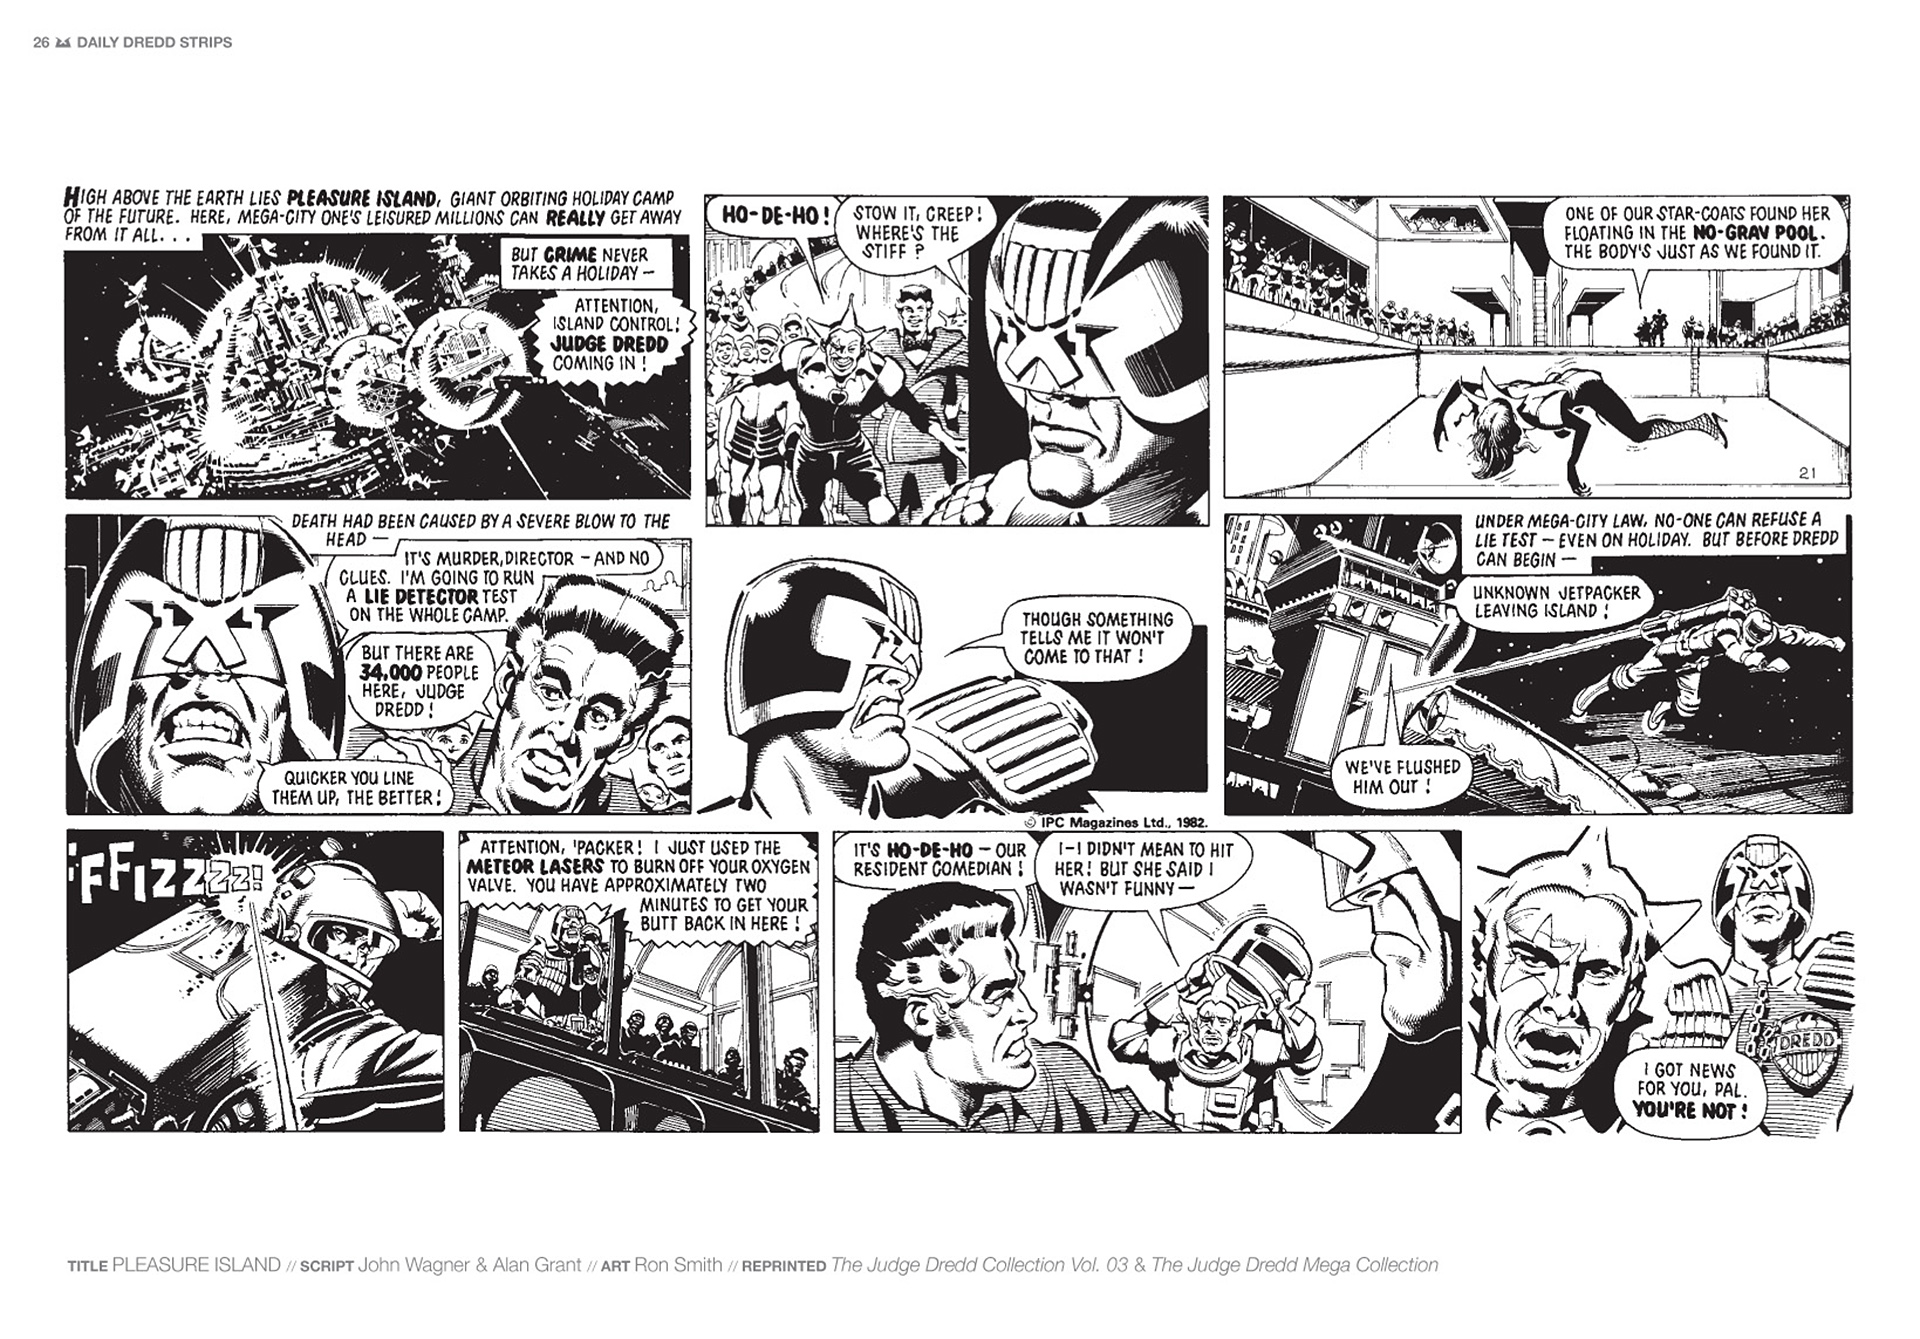 Read online Judge Dredd: The Daily Dredds comic -  Issue # TPB 1 - 29